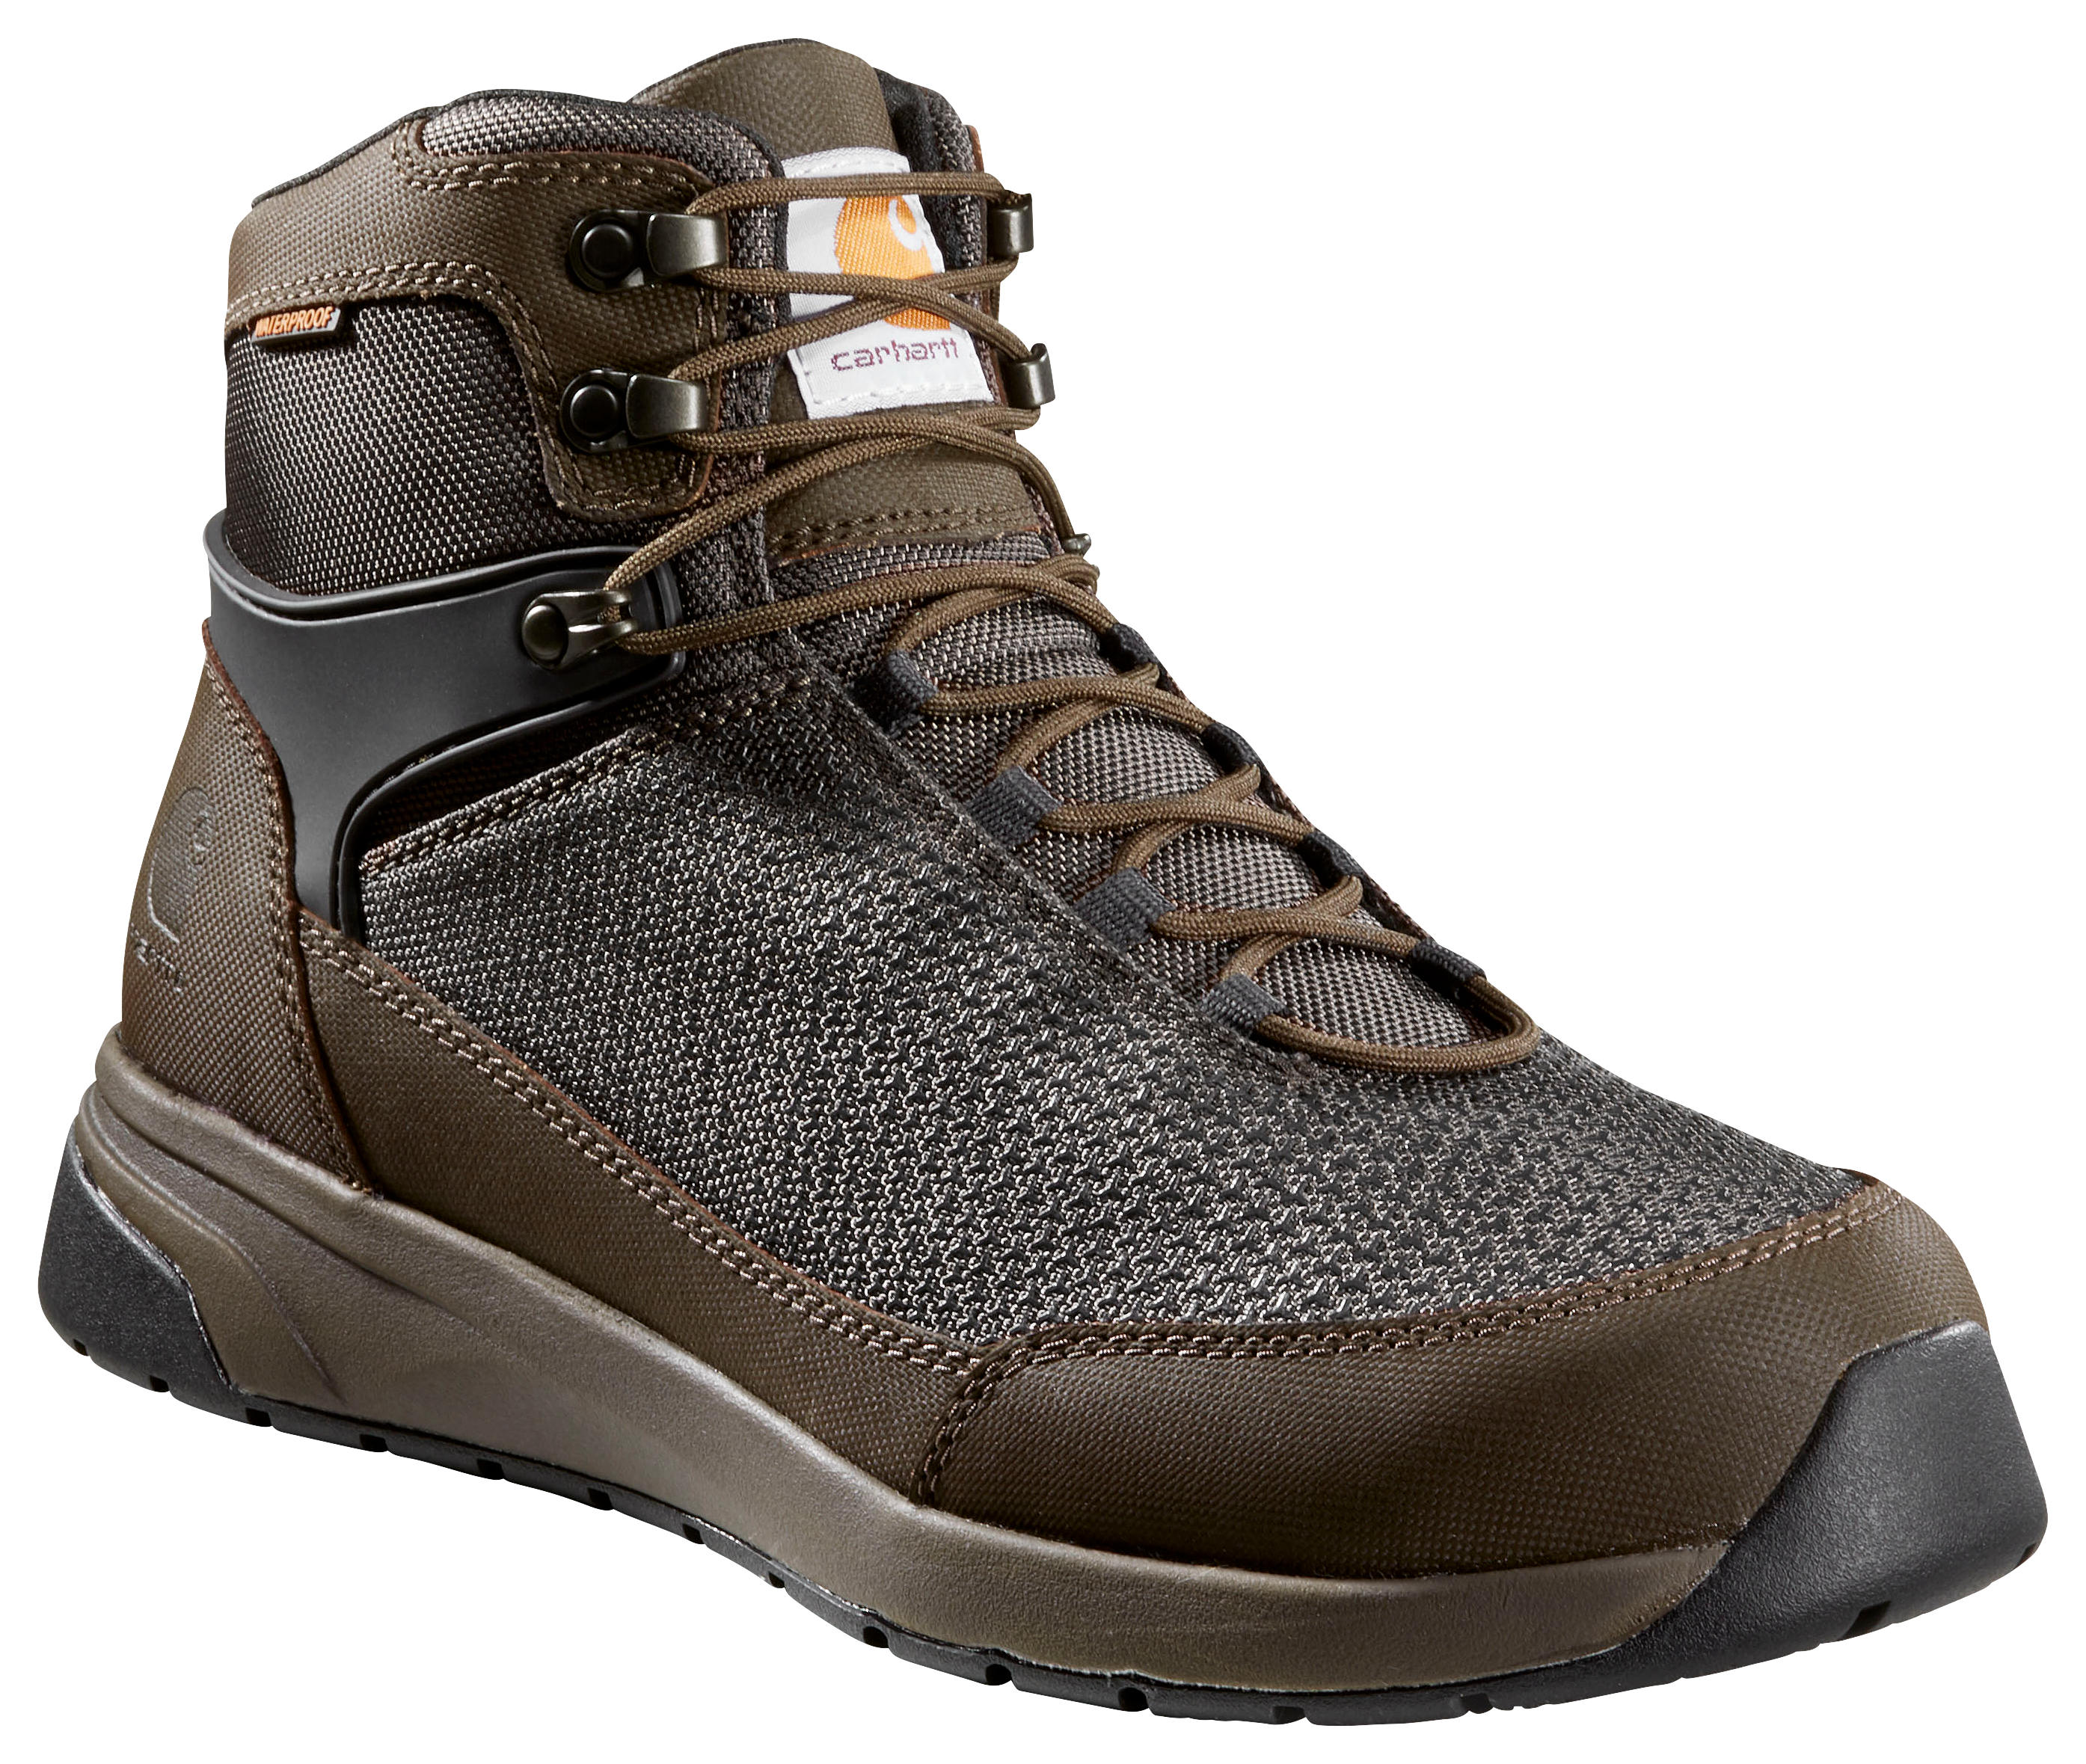 Carhartt Force 6"" Nano Composite-Toe Work Boots for Men - Espresso - 10W